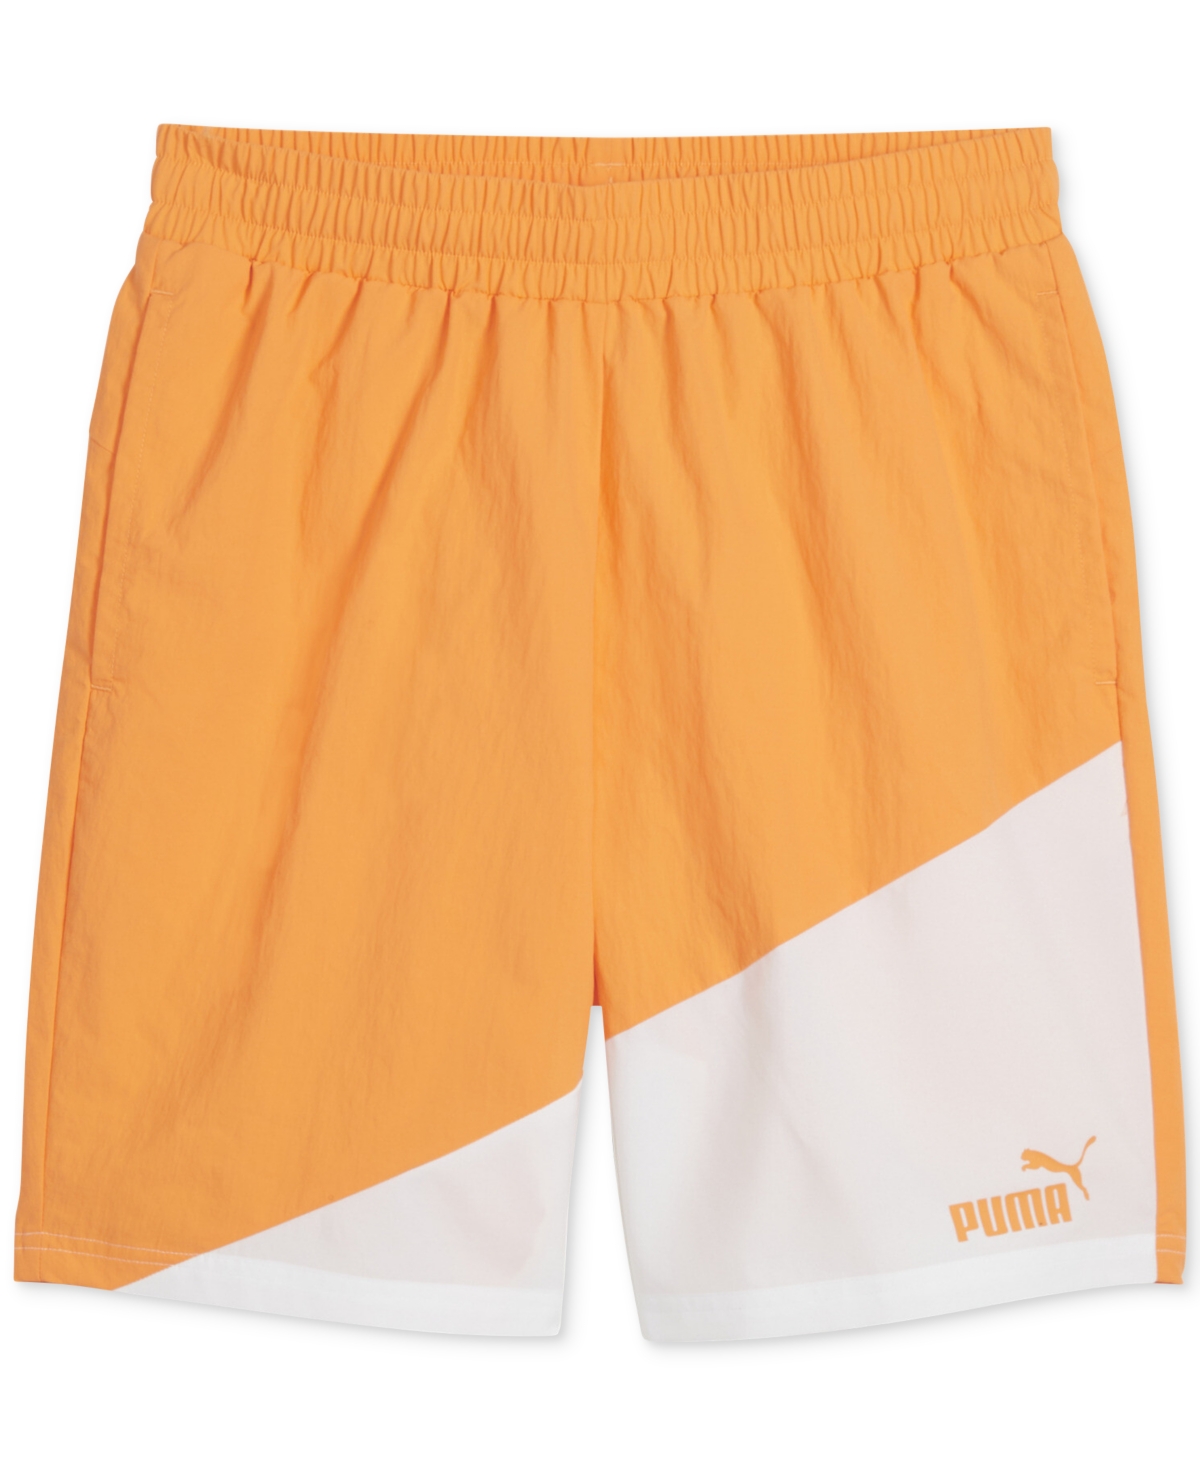 Men's Power Colorblocked Shorts - Clementine